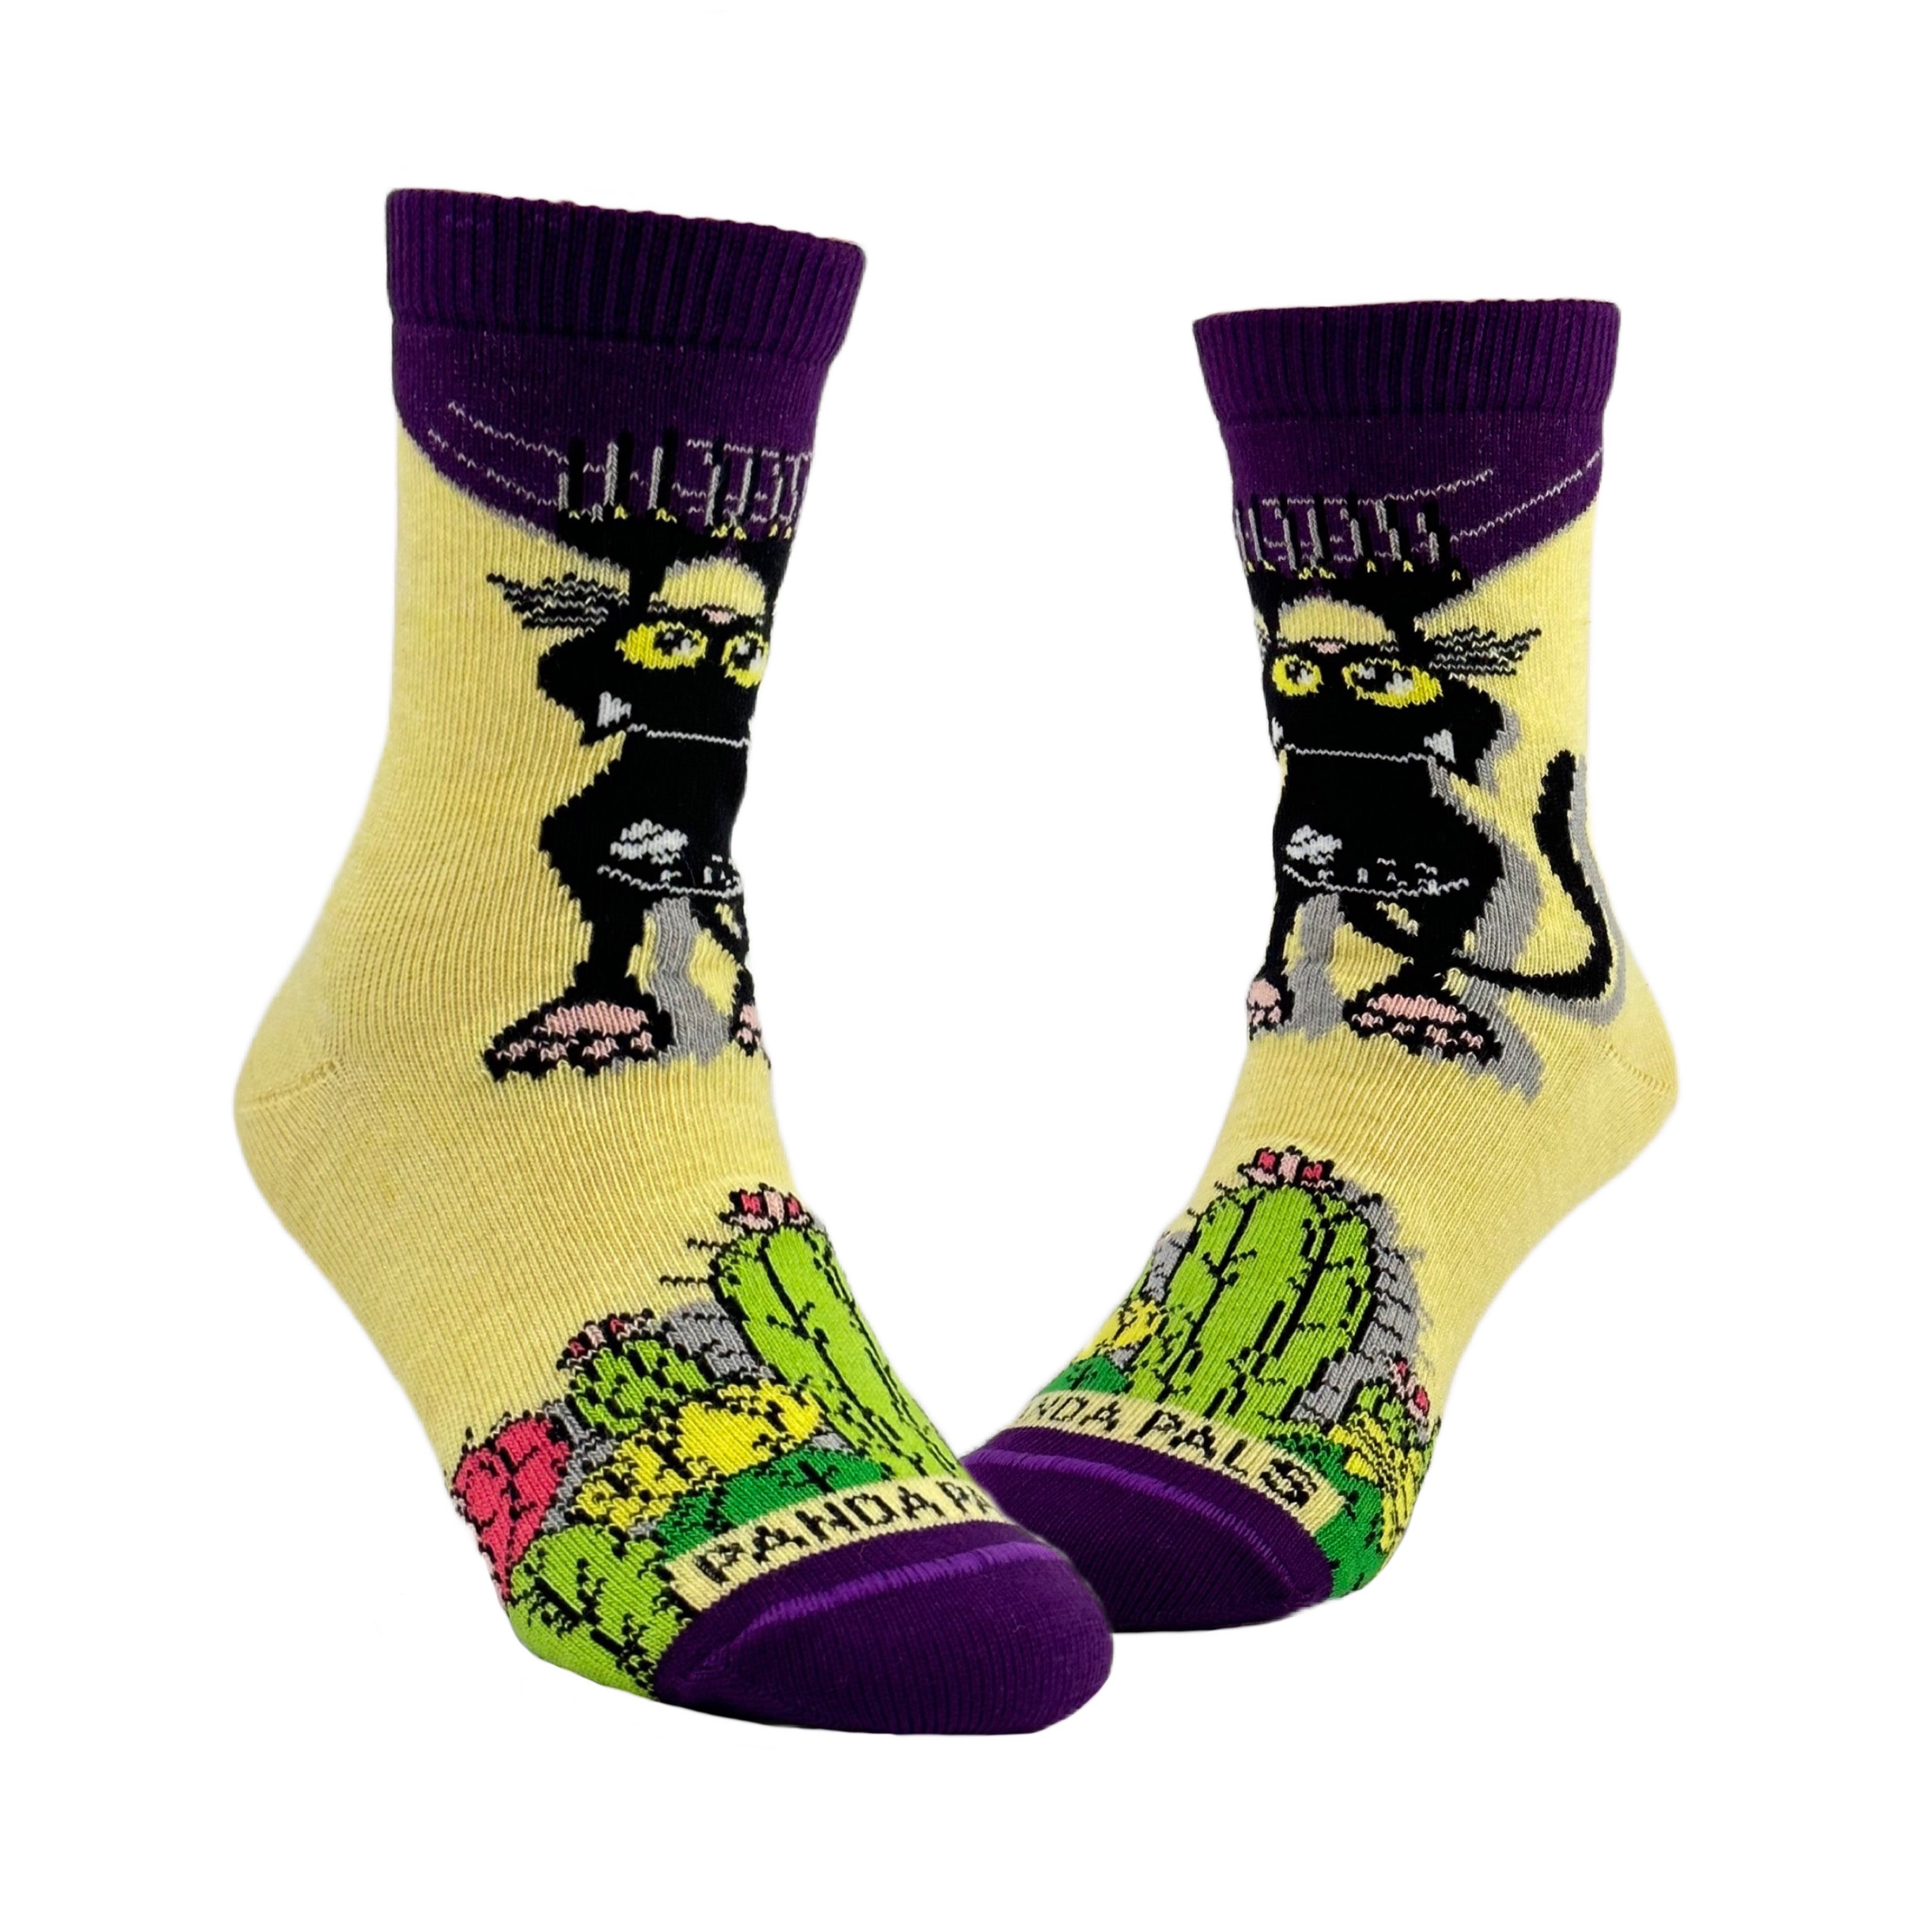 Cactus Cat Socks from the Sock Panda (Ages 3-7)